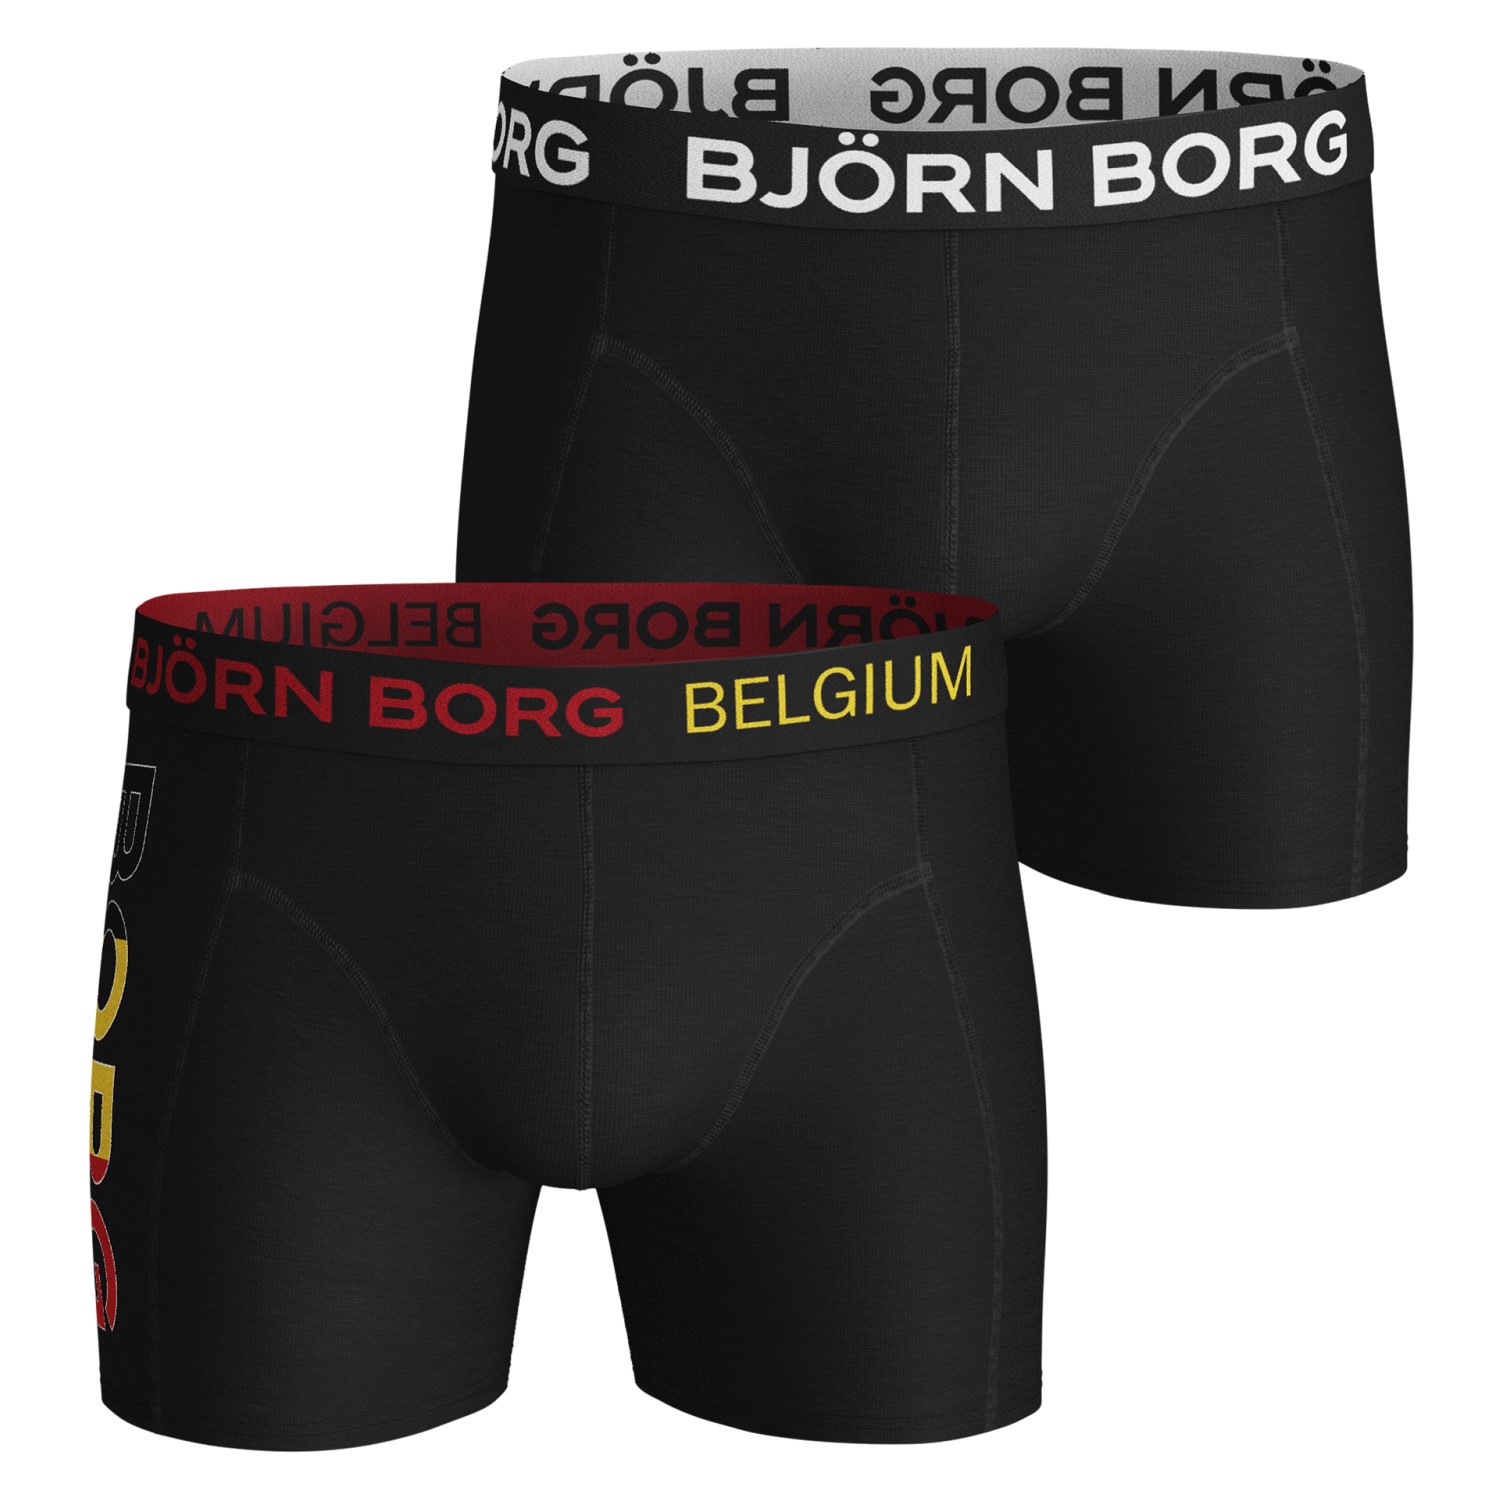 Björn Borg Nations Cotton Stretch Shorts Belguim